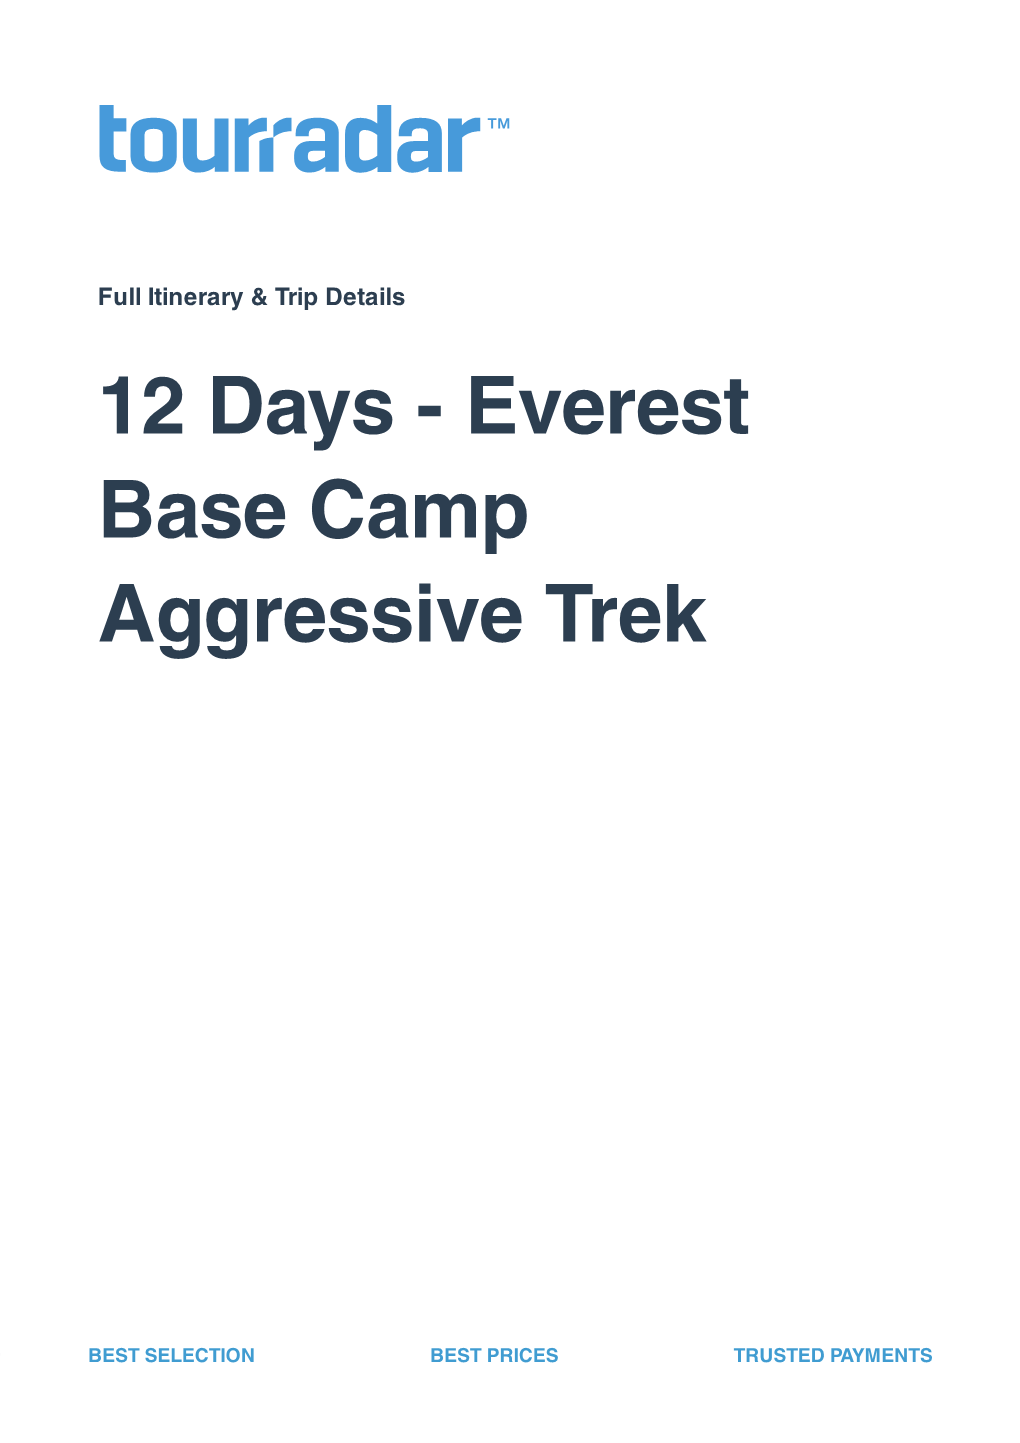 Everest Base Camp Aggressive Trek